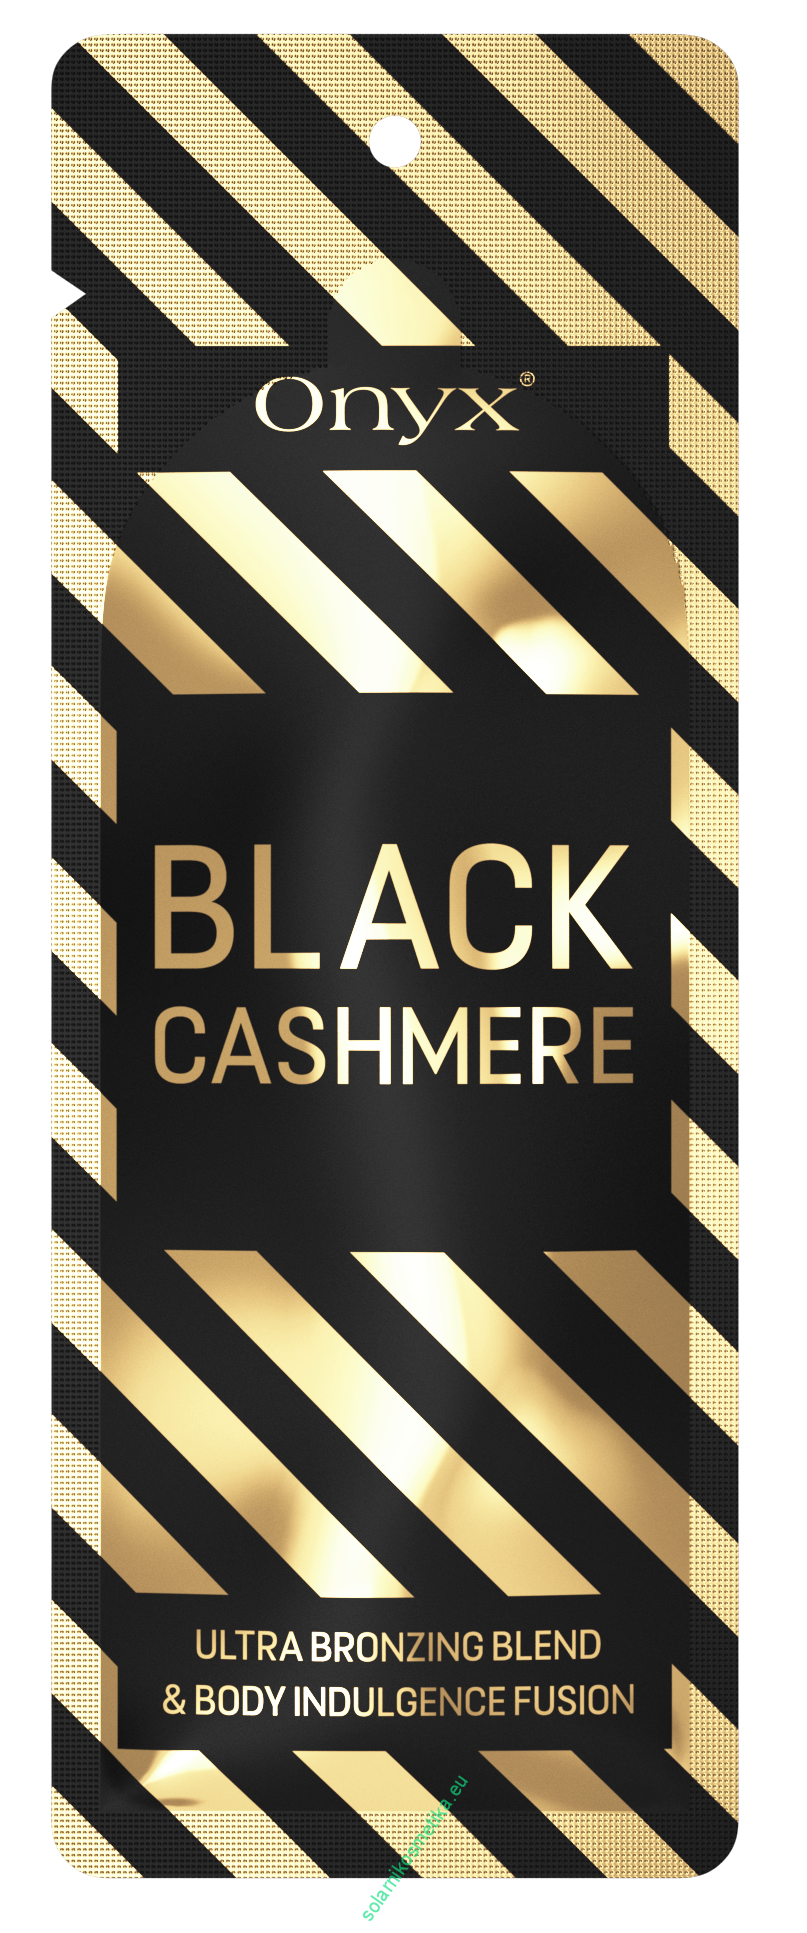 BLACK CASHMERE Onyx tan